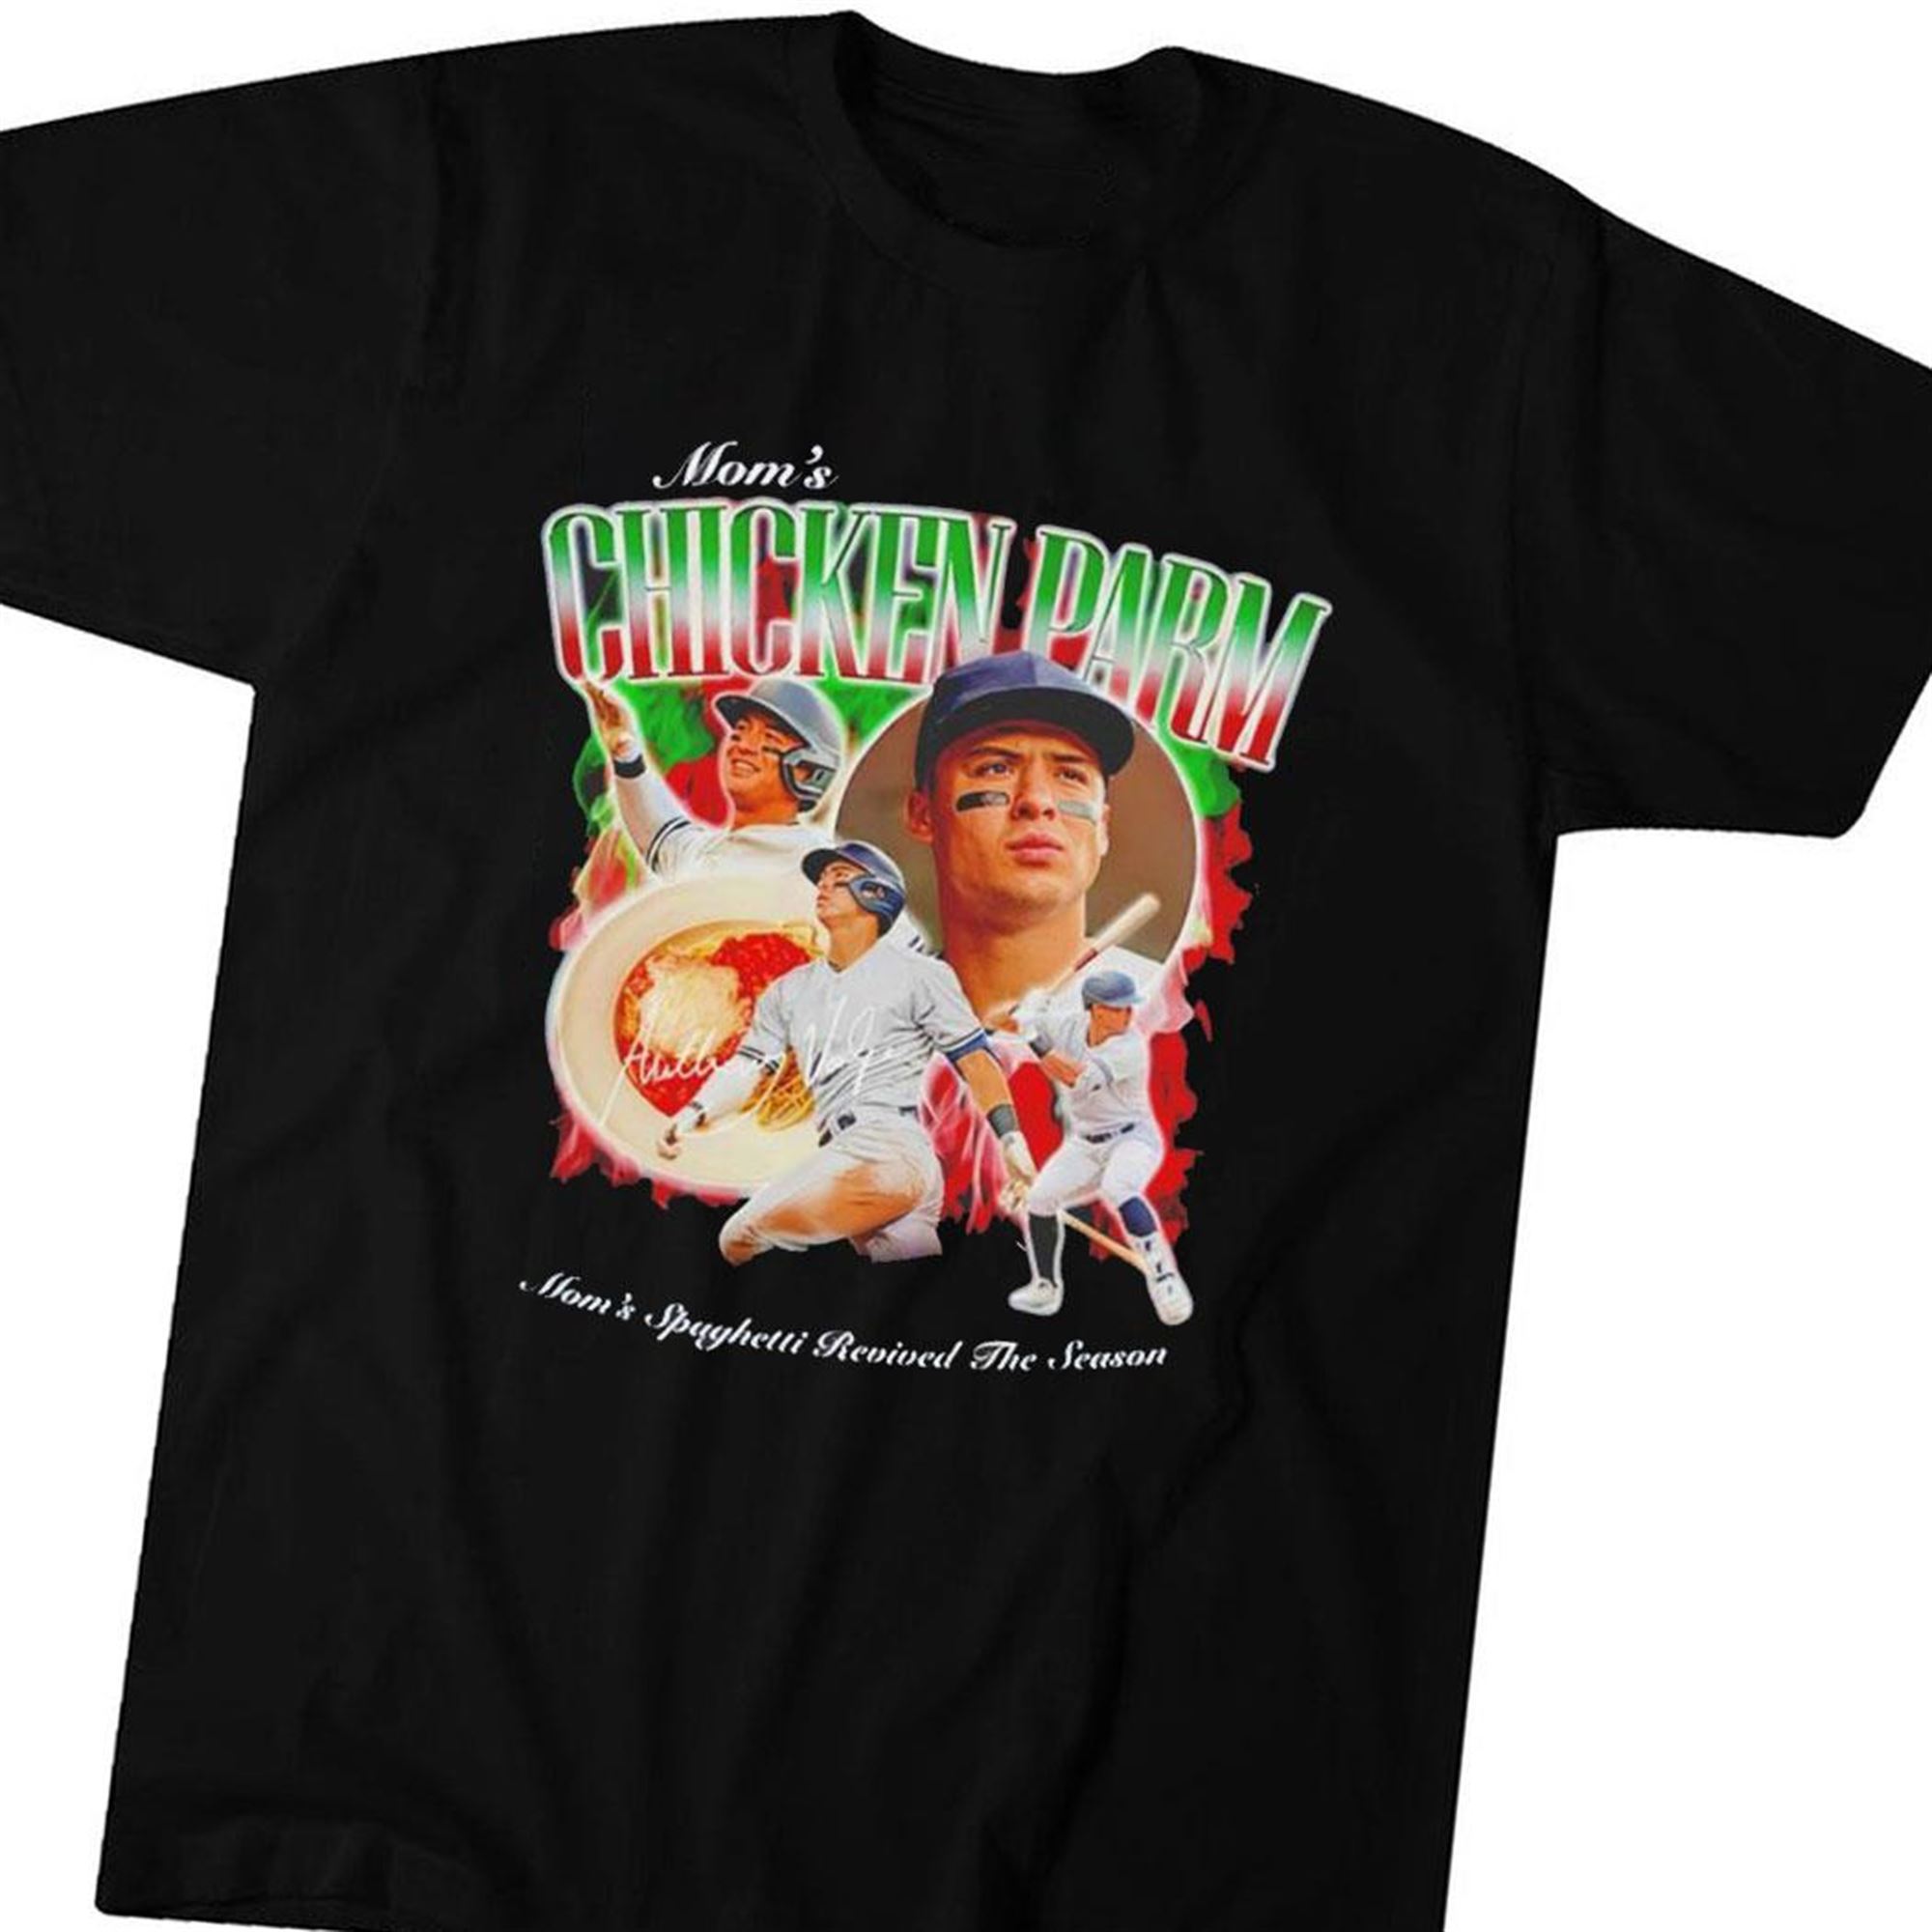 Moms Chicken Parm Moms Spaghetti Revived The Season T-shirt